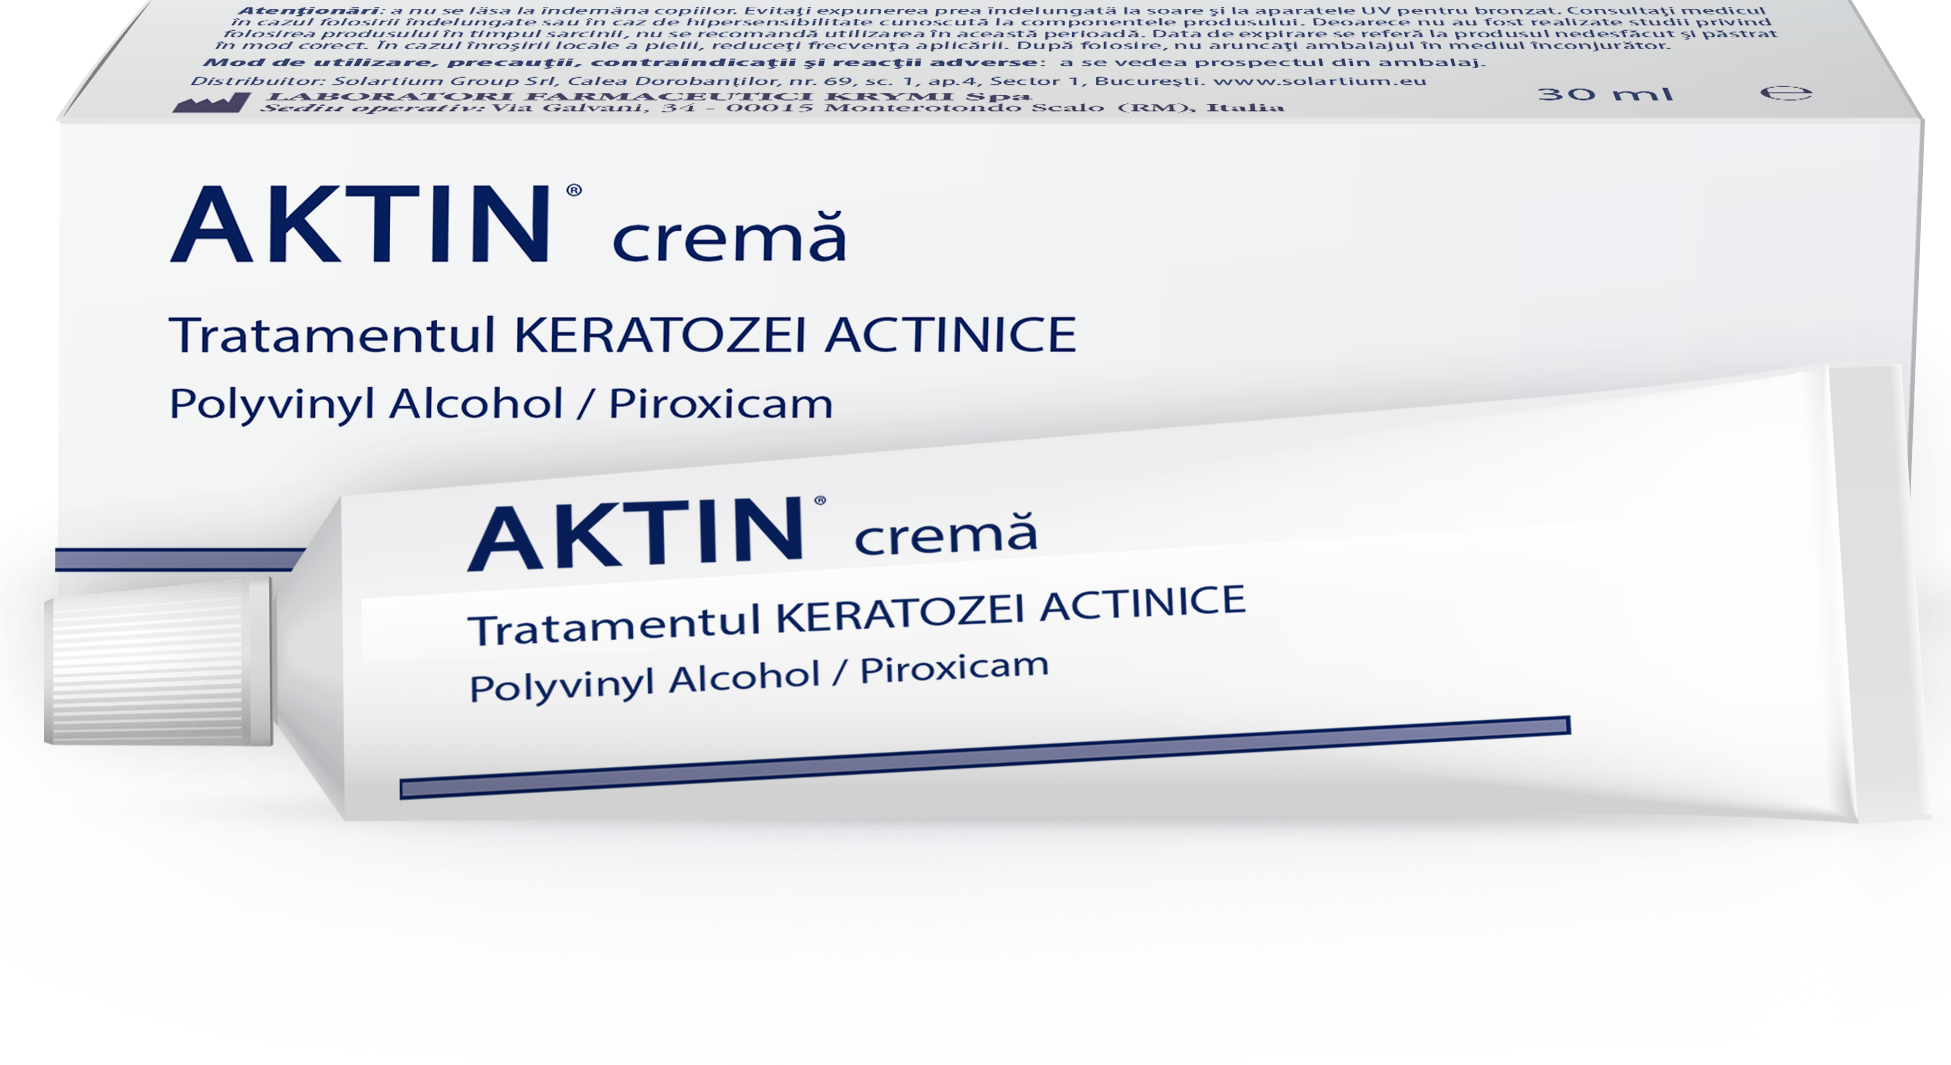 Keratoze - Aktin Crema pentru Tratarea Keratozelor 30 ml, farmacieieftina.ro